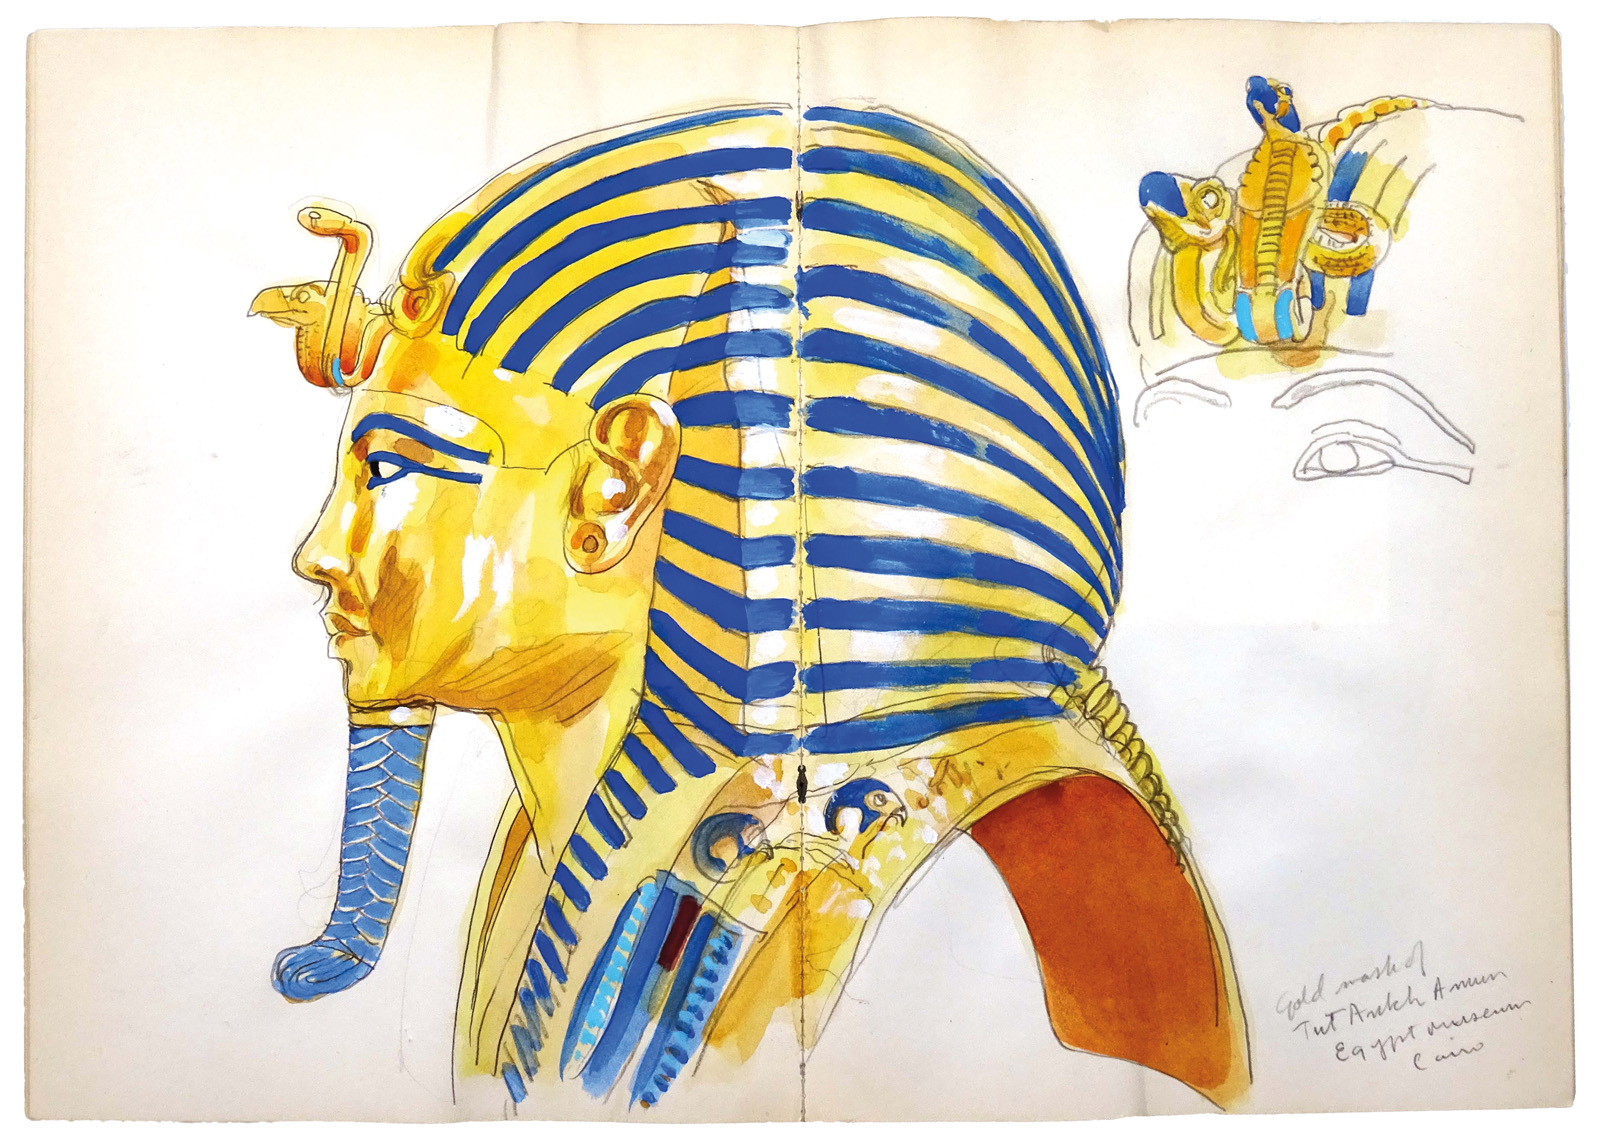 spread-2-3-The-brow-of-Pharaoh-Cairo-museum_web.jpg?width=1600&height=1147&ext=.jpg